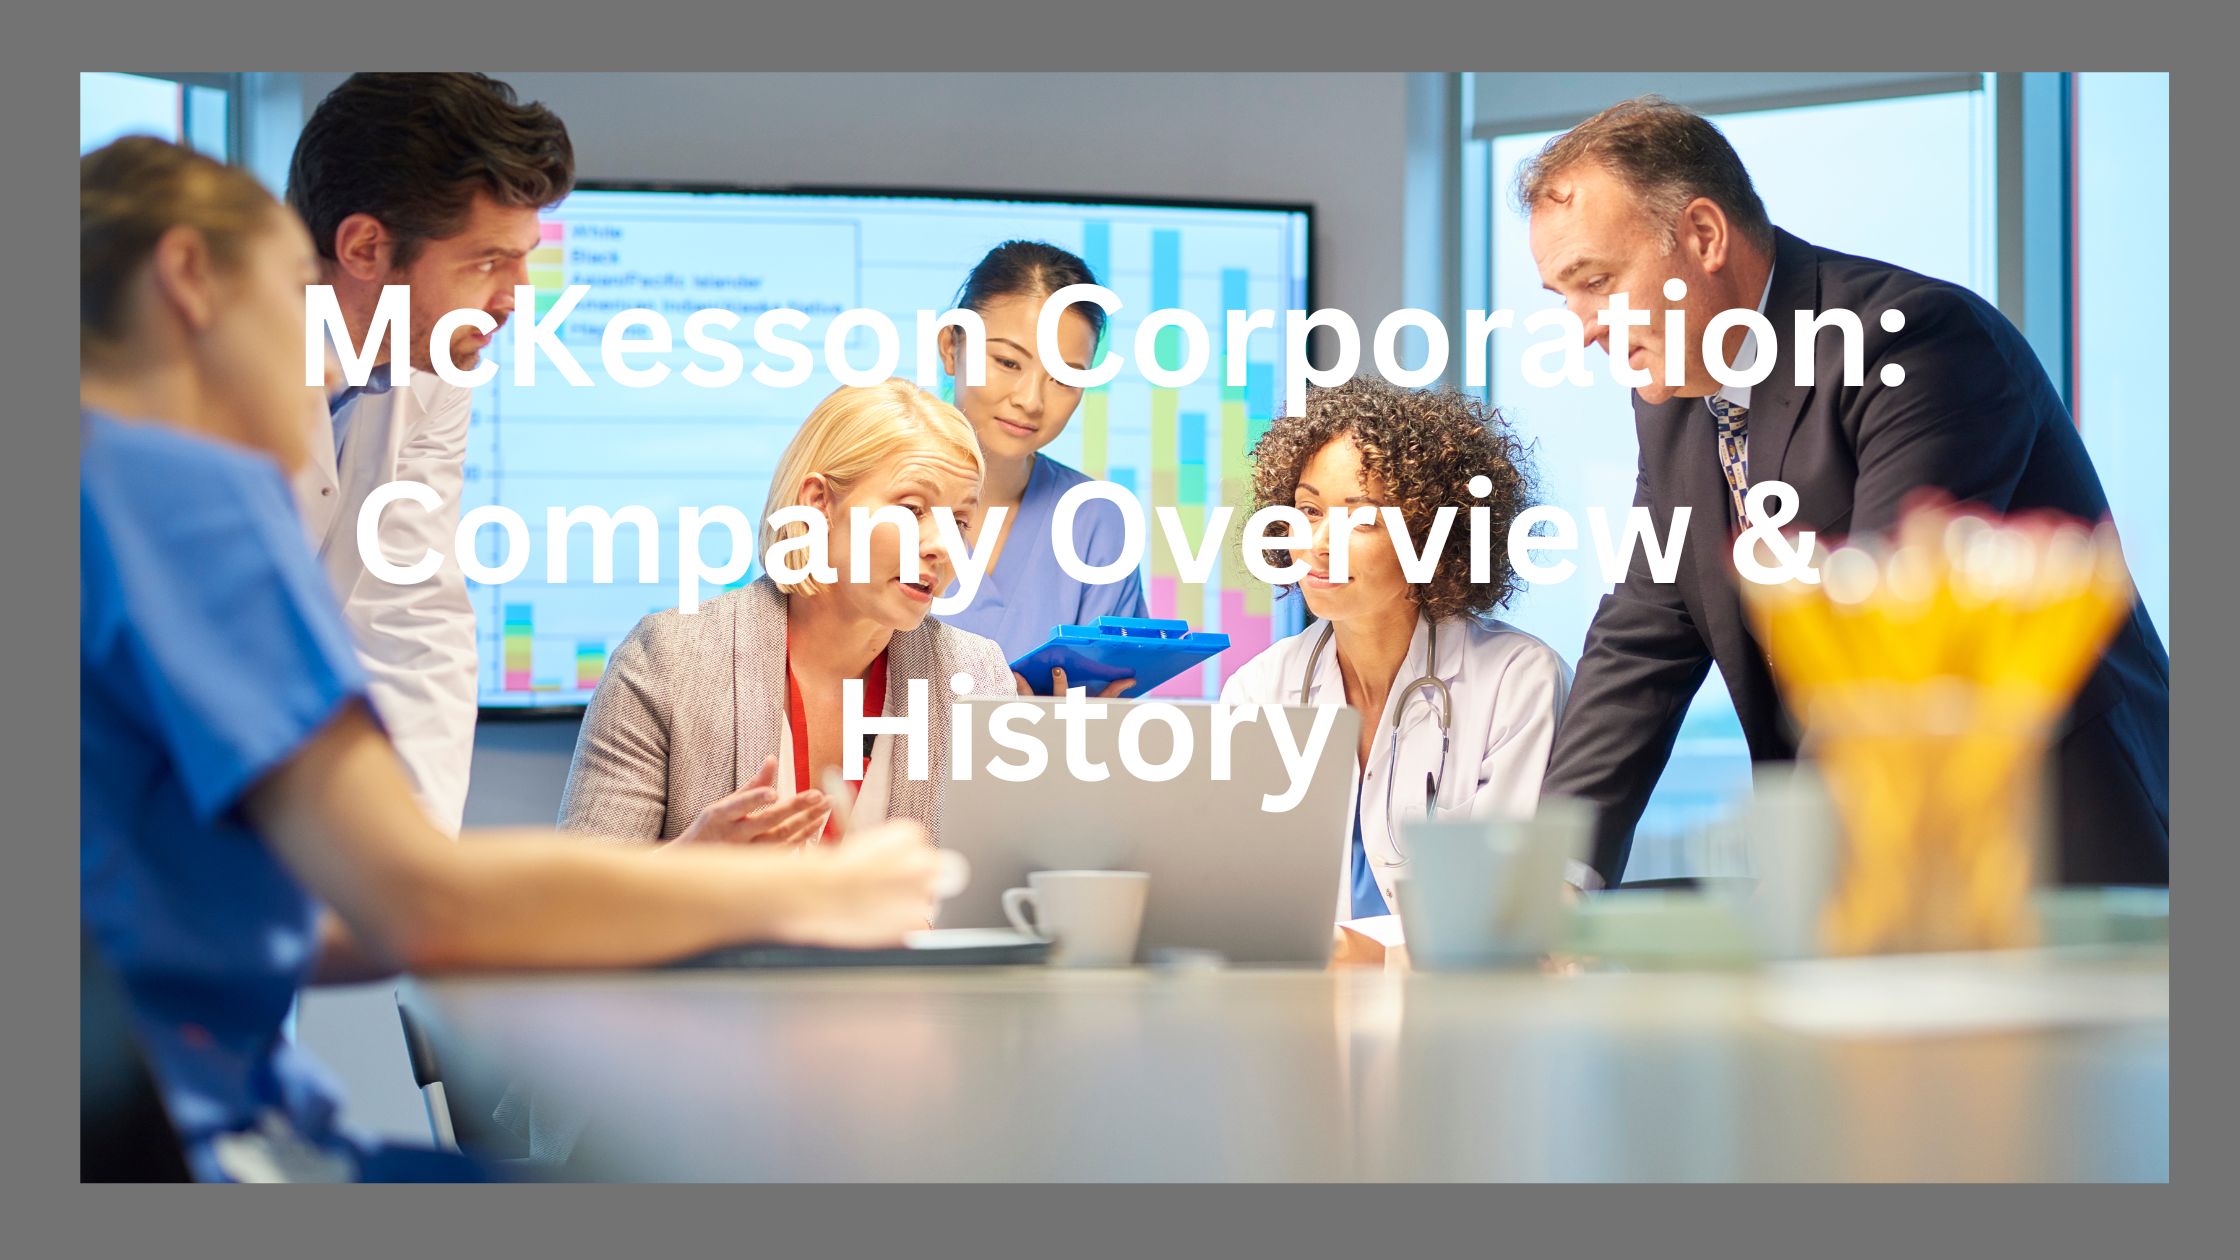 McKesson Corporation: Company Overview & History